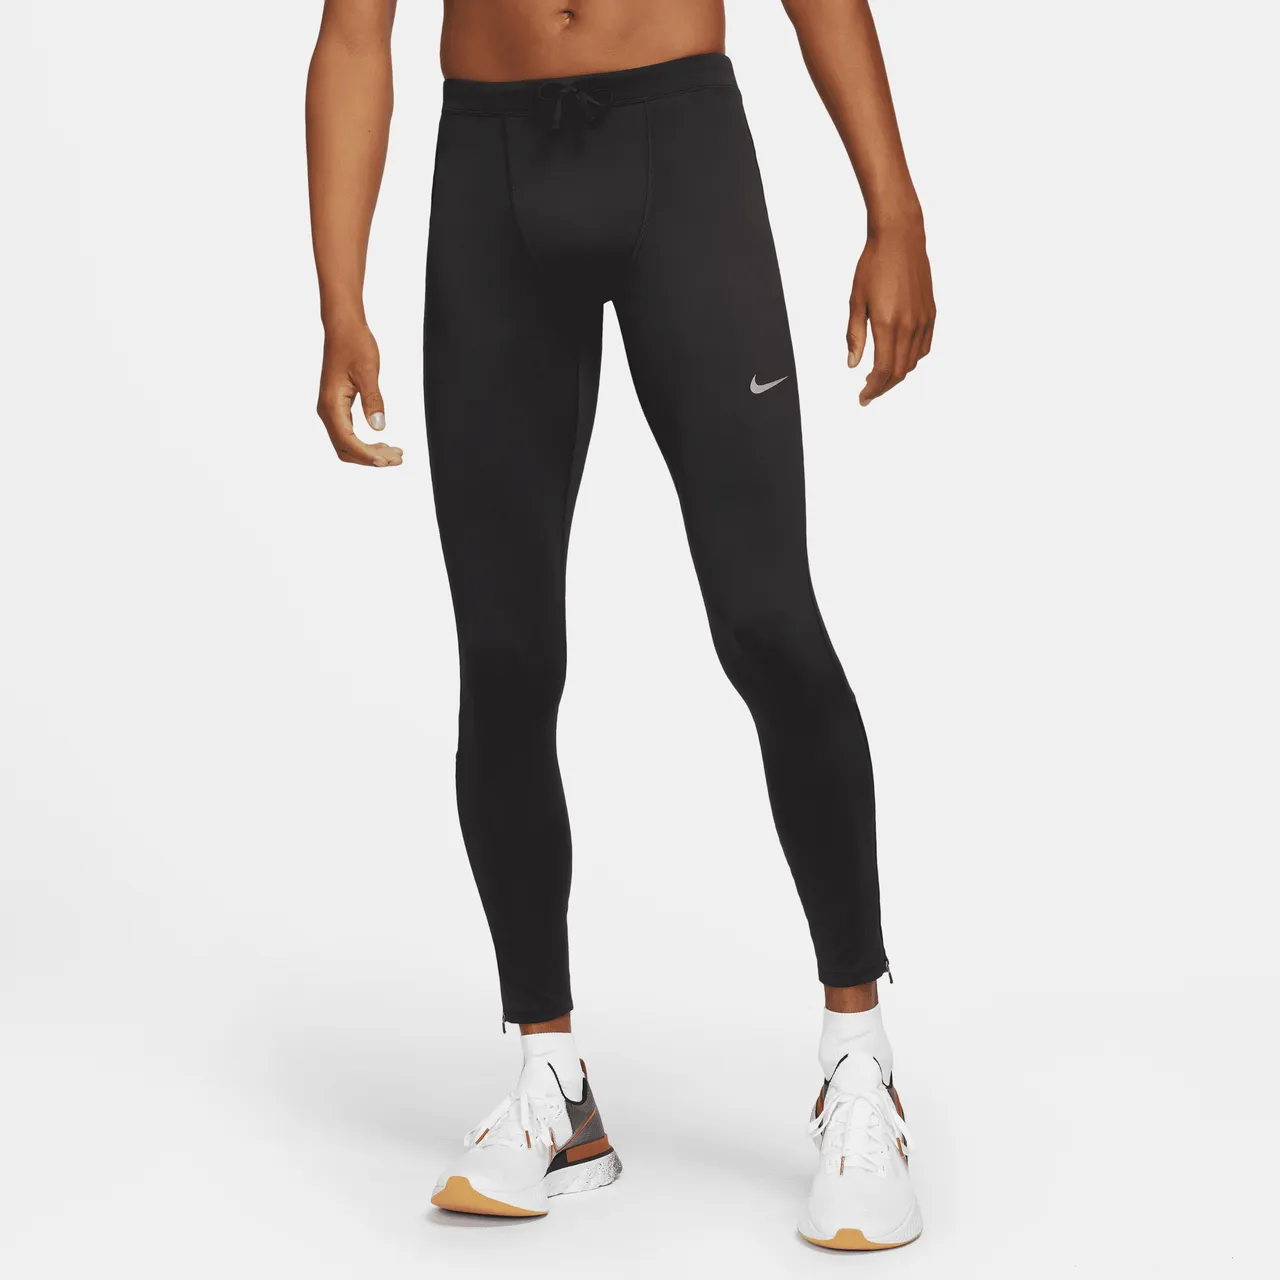 Nike Challenger Men's Dri-FIT Running Tights - Black - Polyester